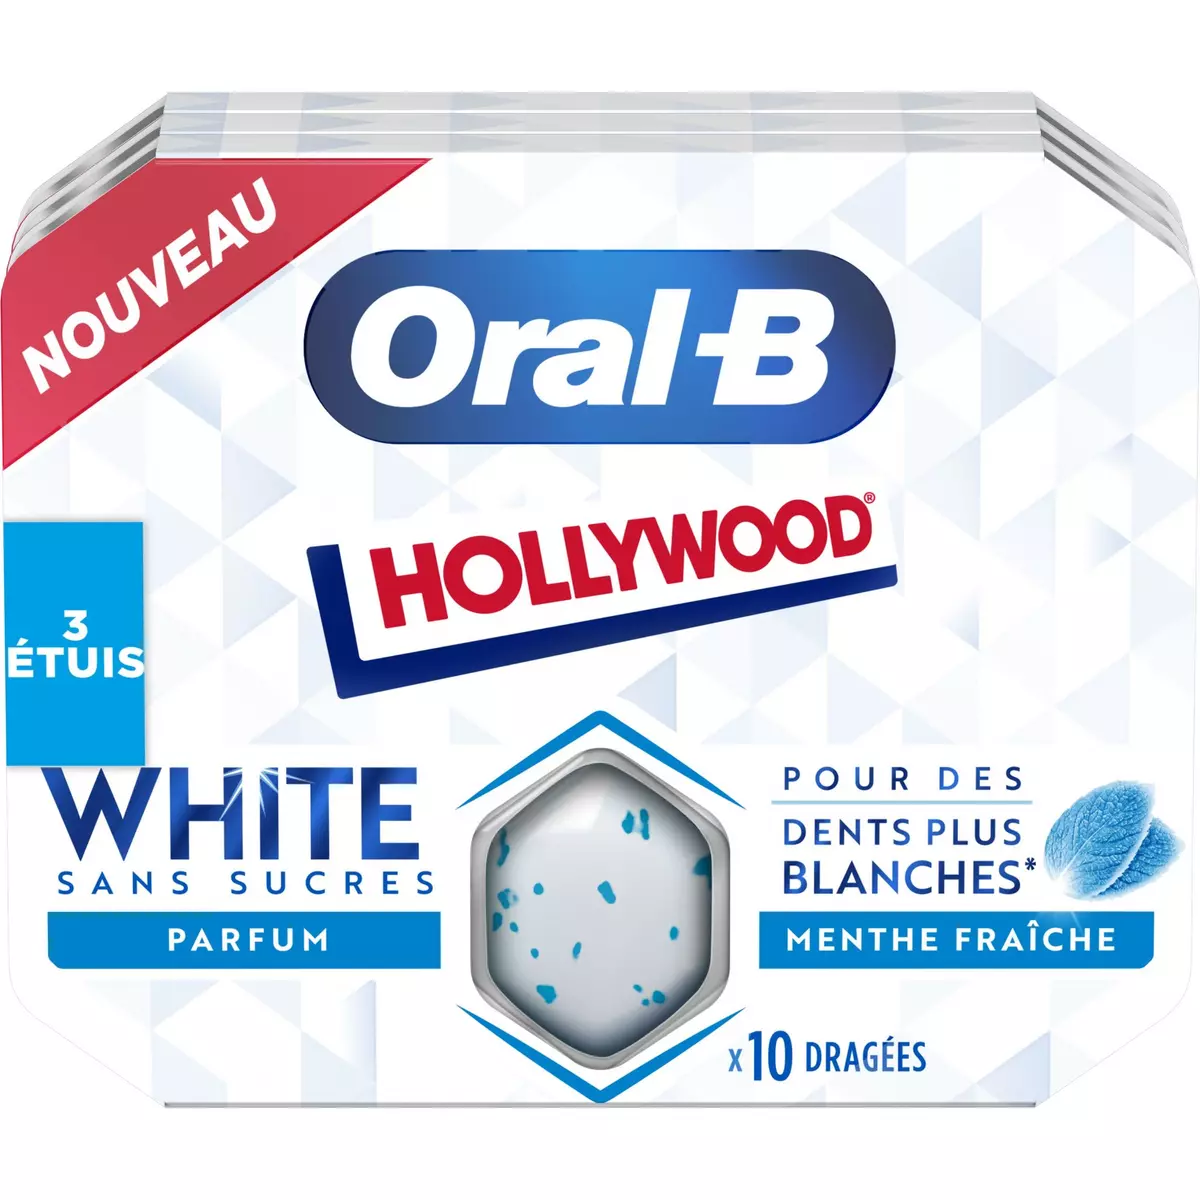 ORAL-B Hollywood dragées menthe fraîche White 10 dragées 51g